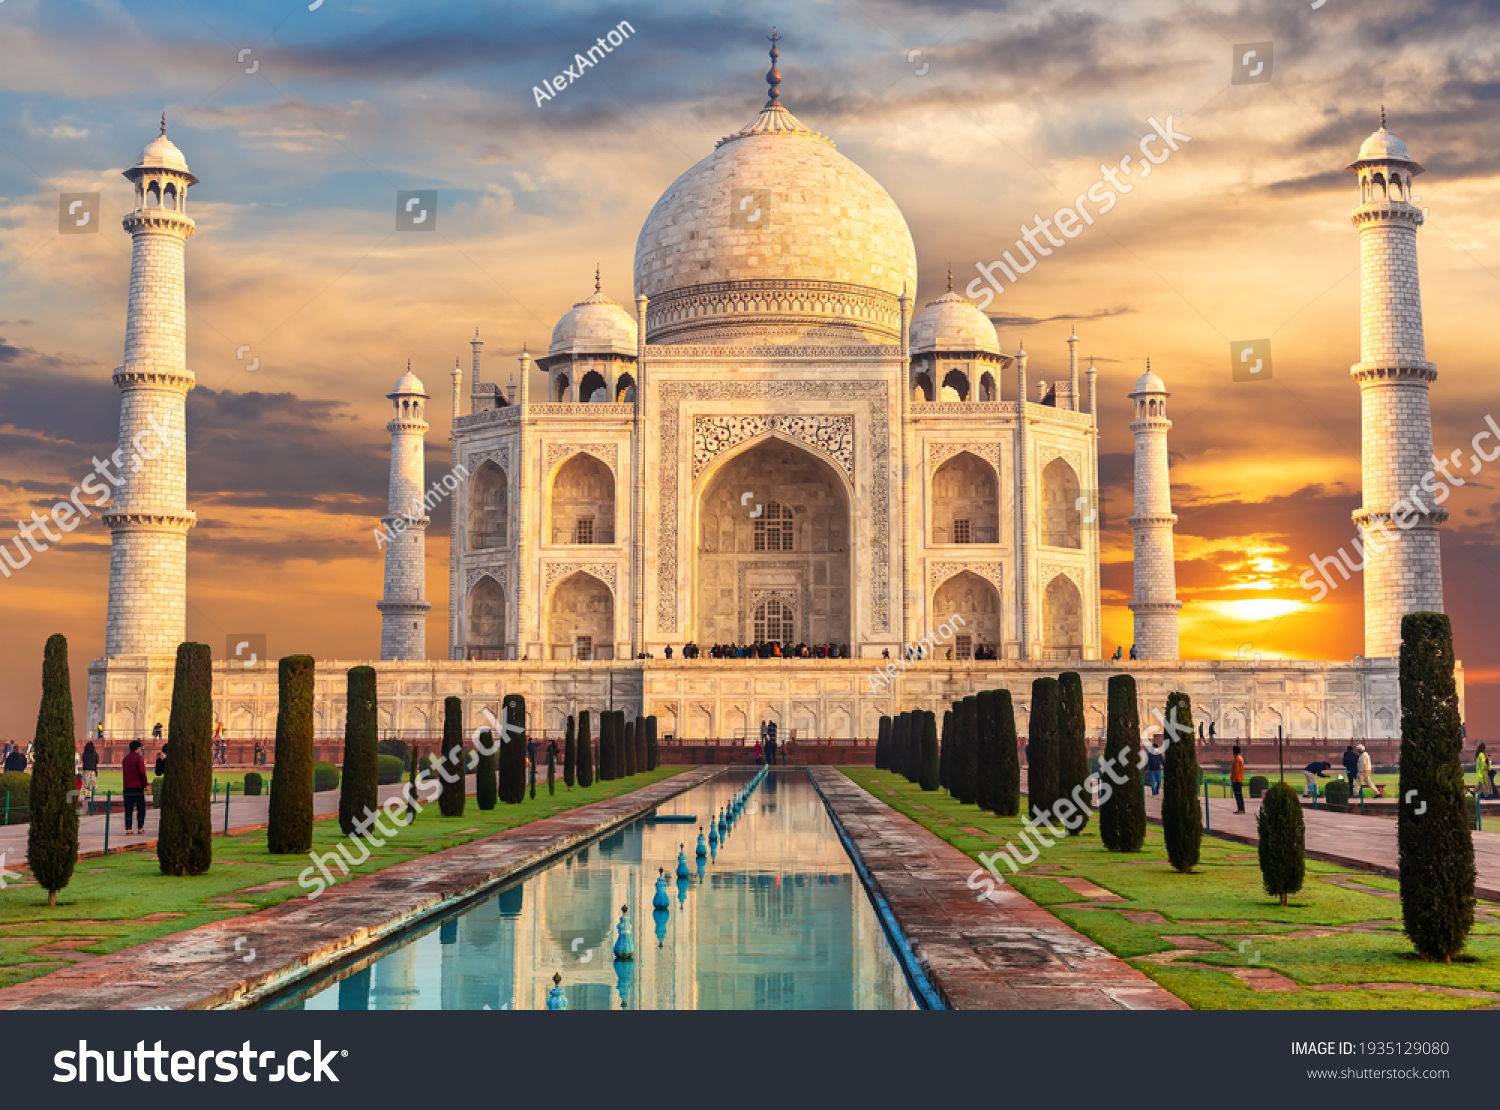 Taj Mahal at sunset, famous place of visit, India, Agra #1935129080